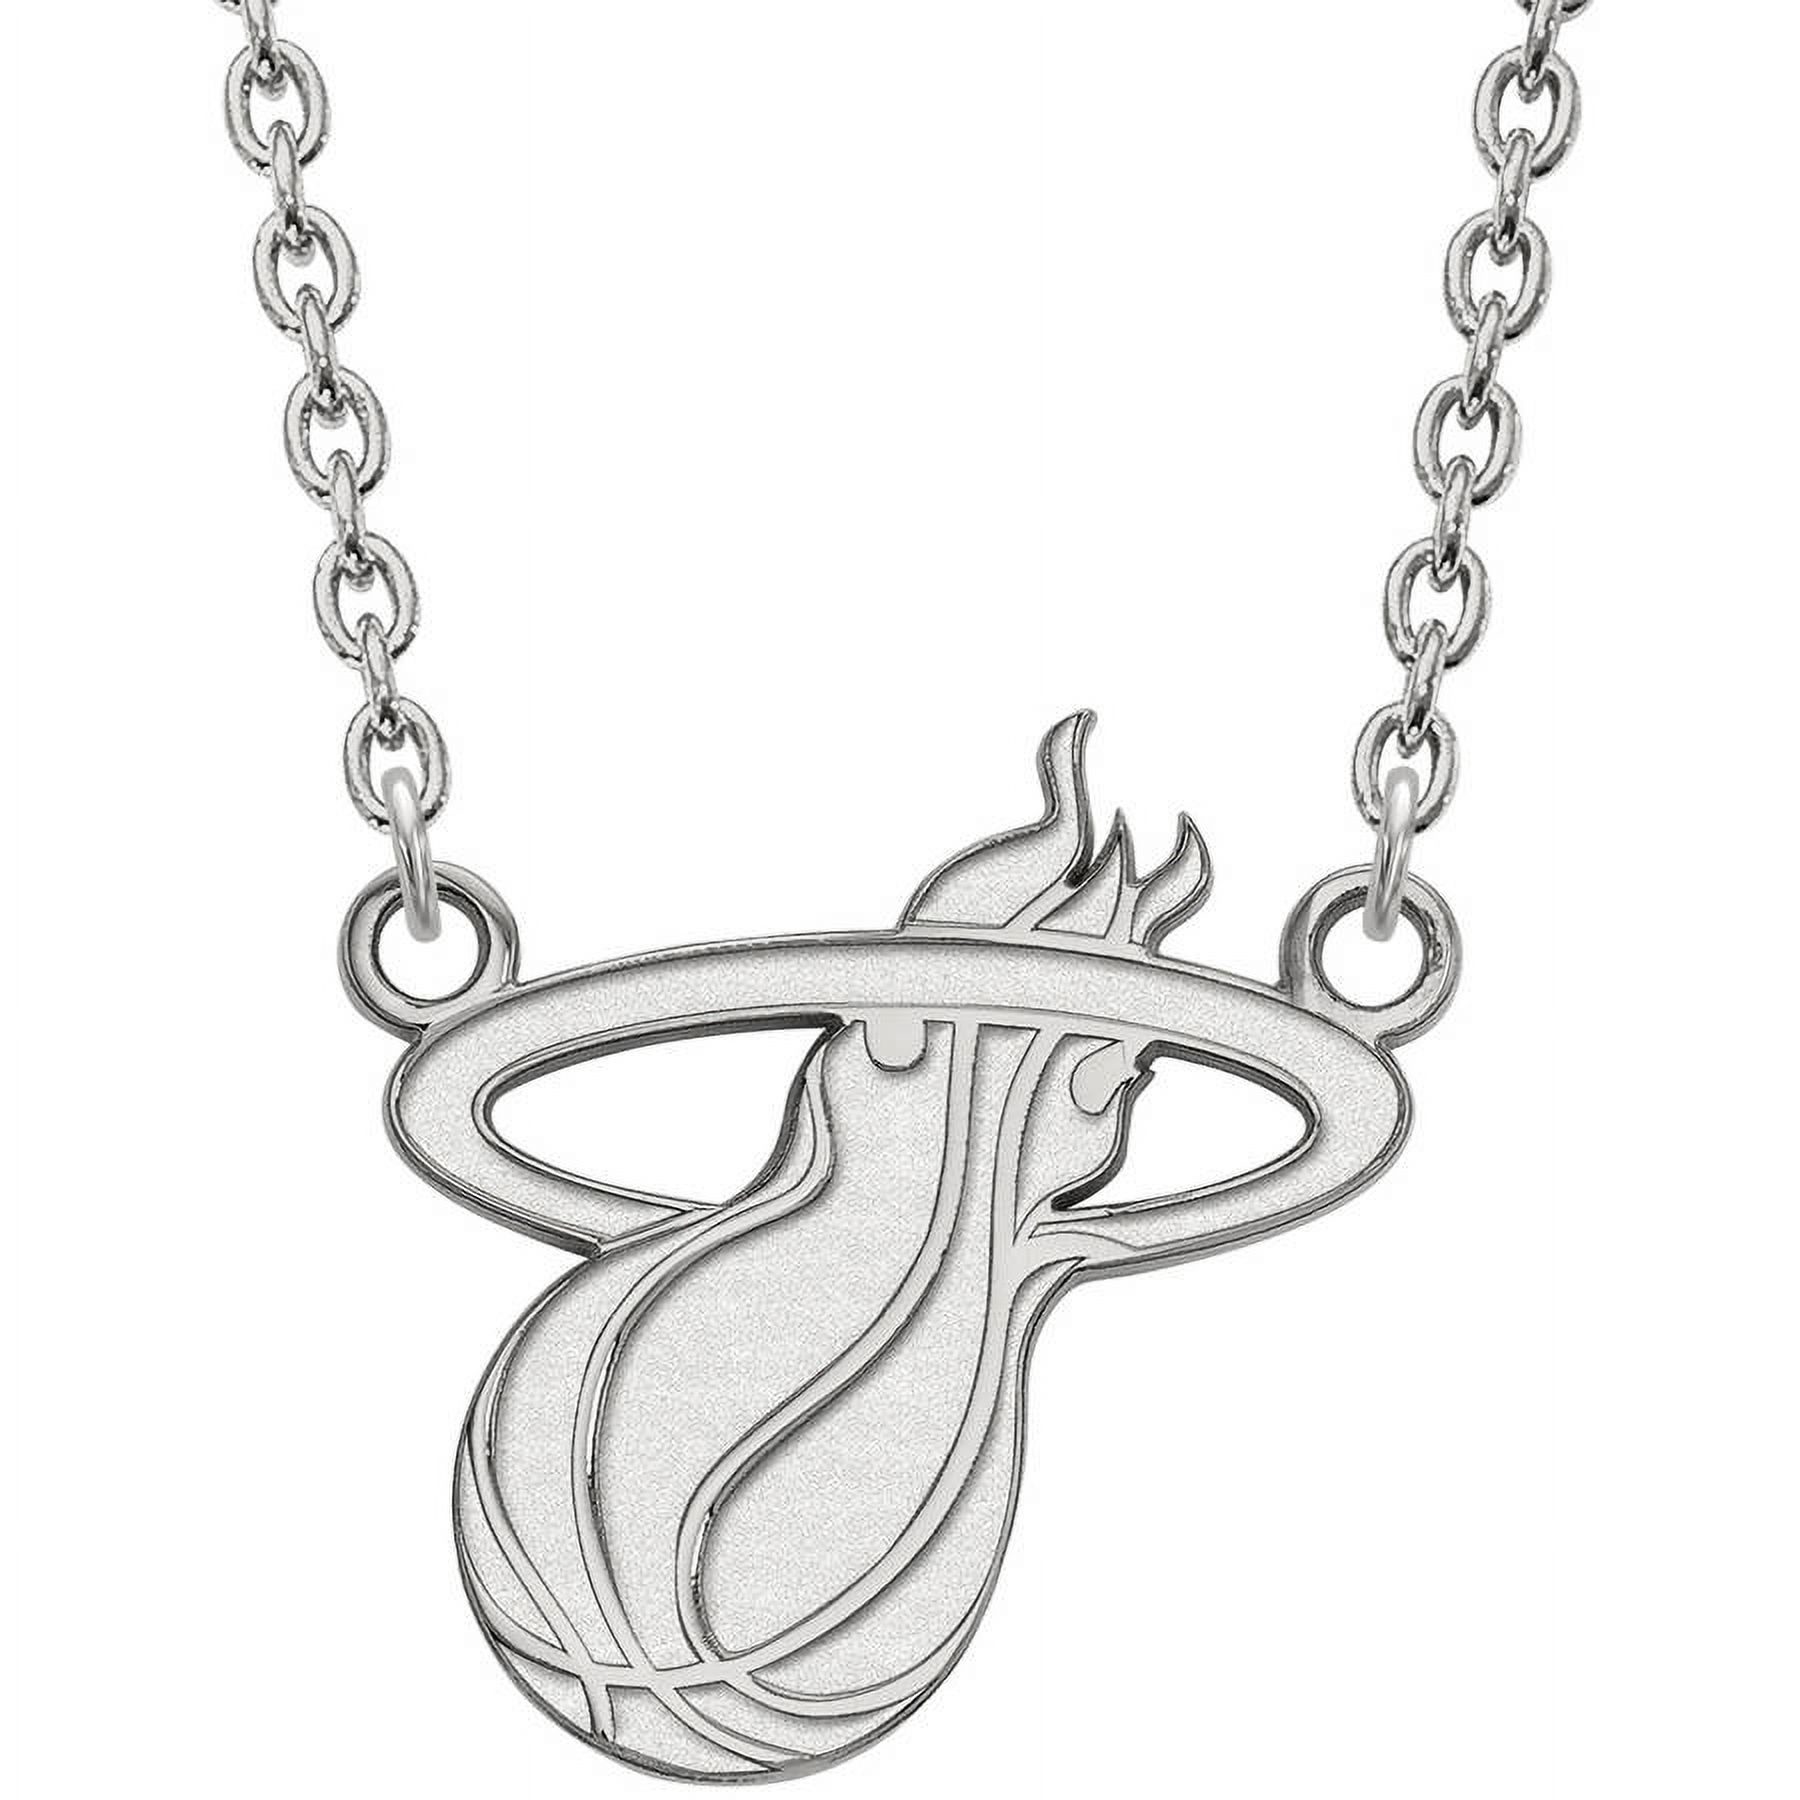 LogoArt 10 Karat White Gold NBA Miami Heat Large Pendant with Necklace - image 1 of 5